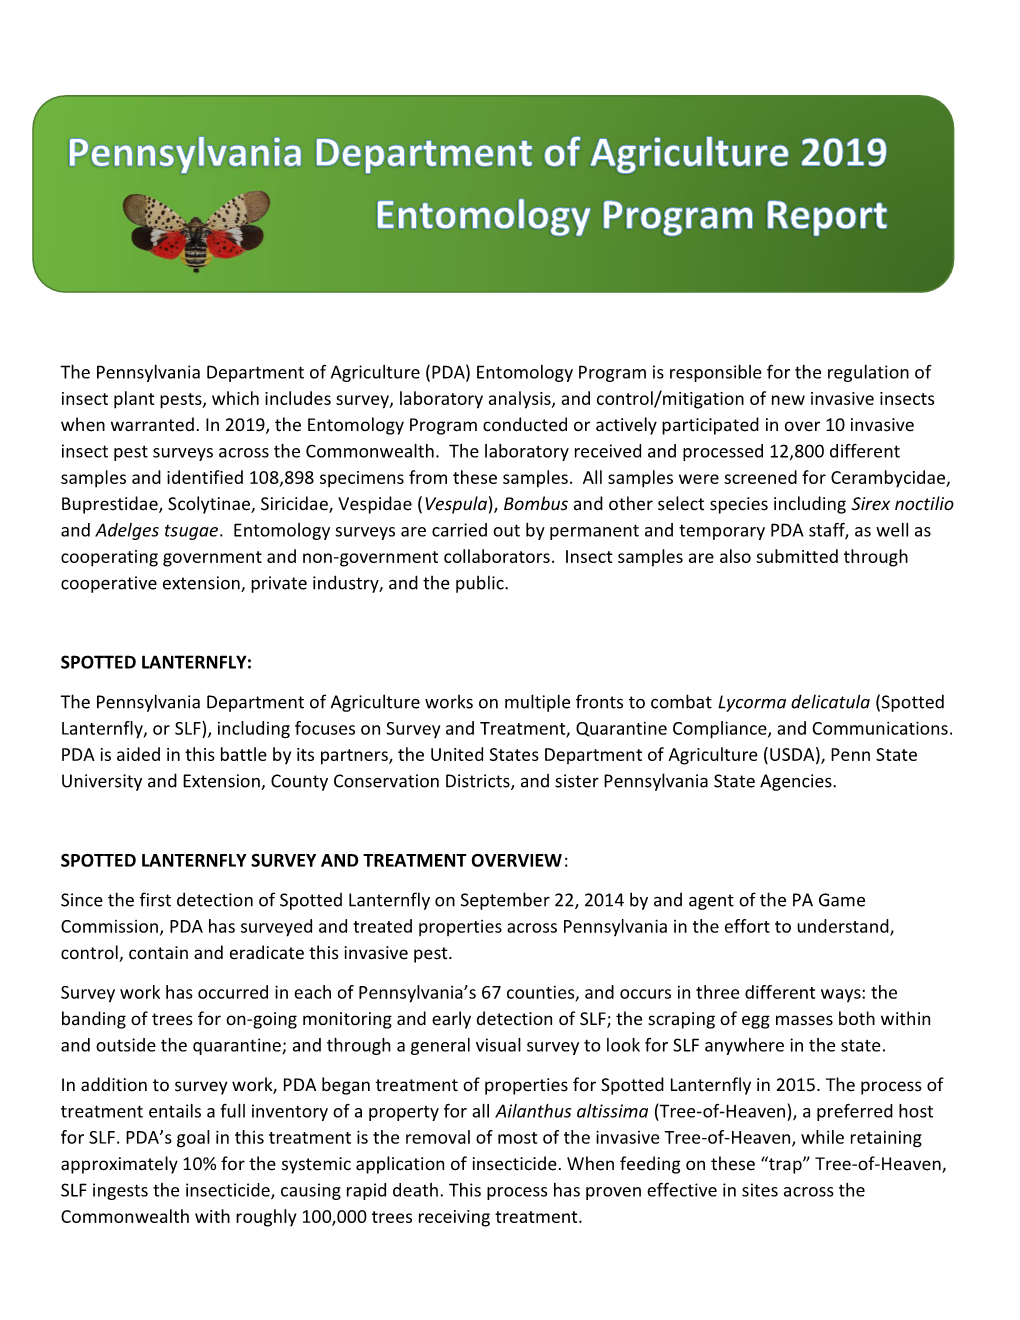 2019 Entomology Program Highlights